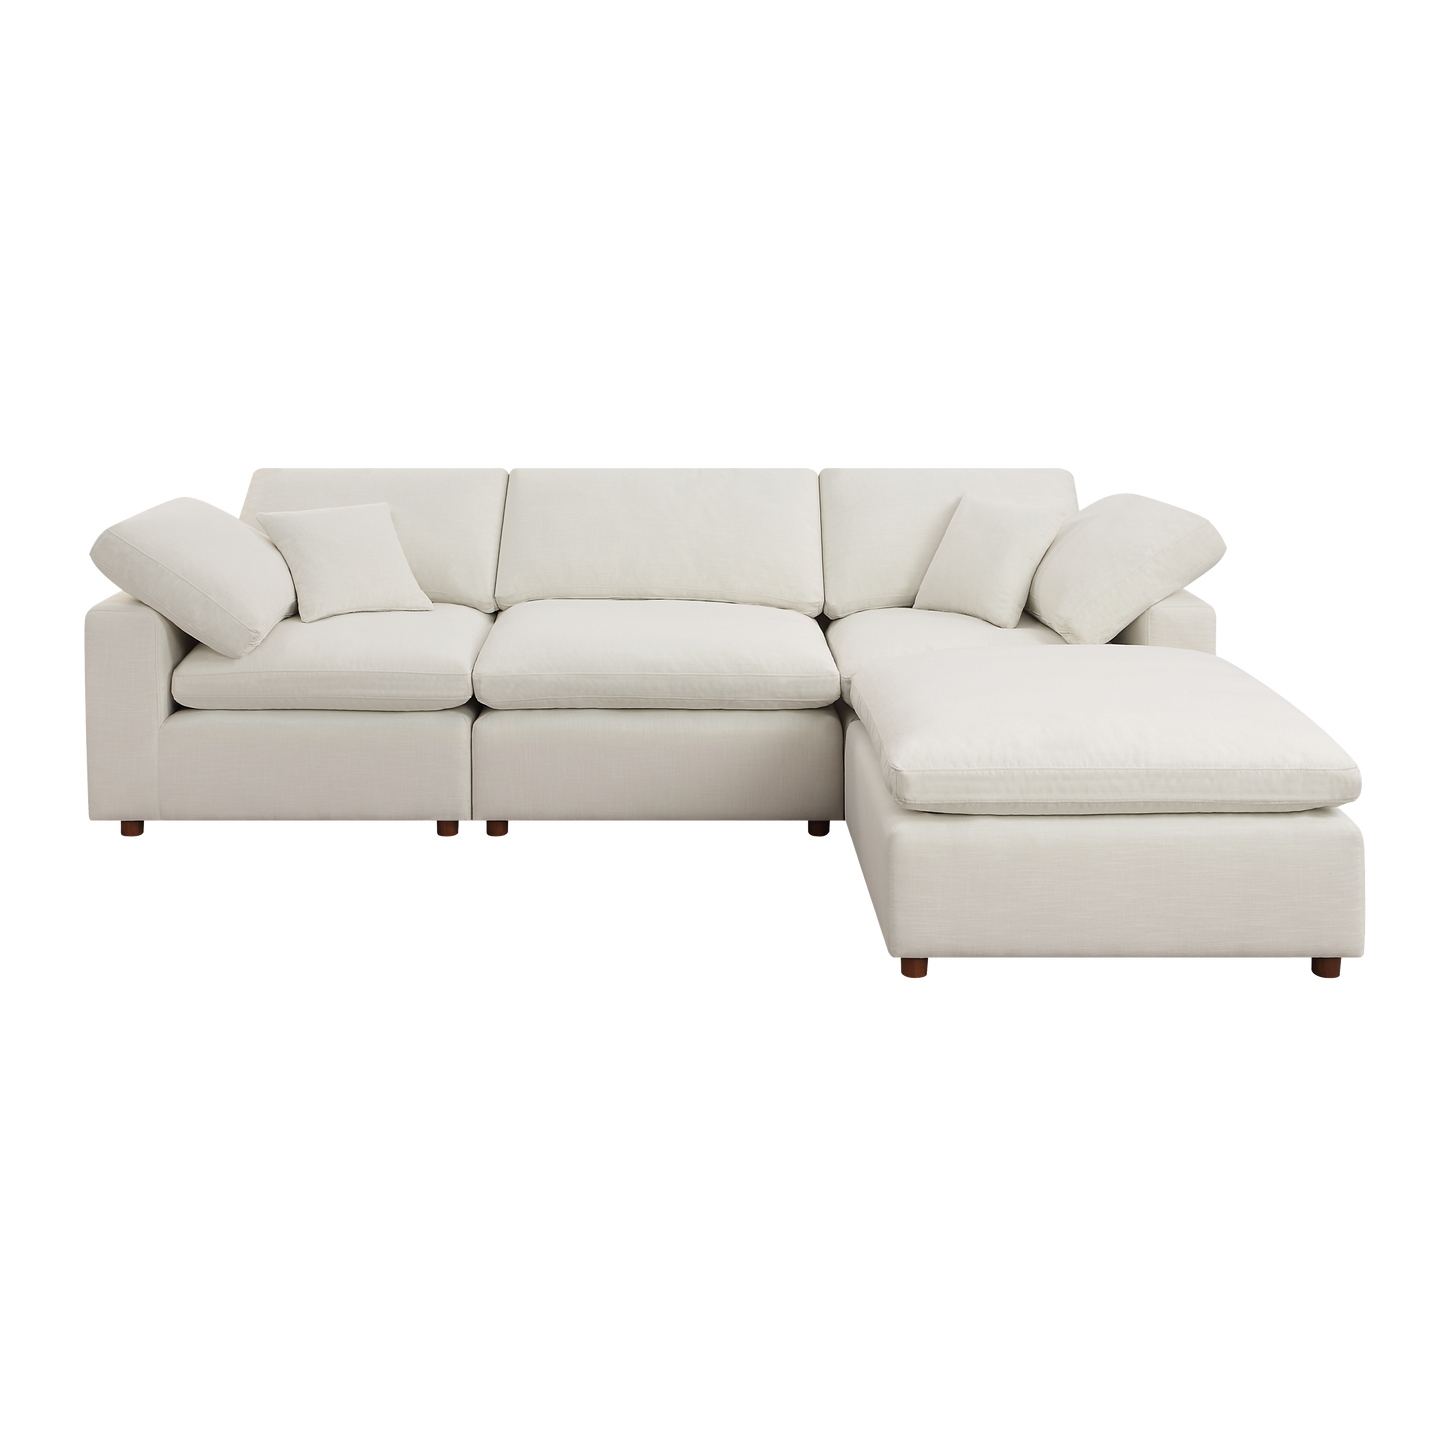 Modern Modular Sectional Sofa Set, Self-customization Design Sofa, White - Enova Luxe Home Store